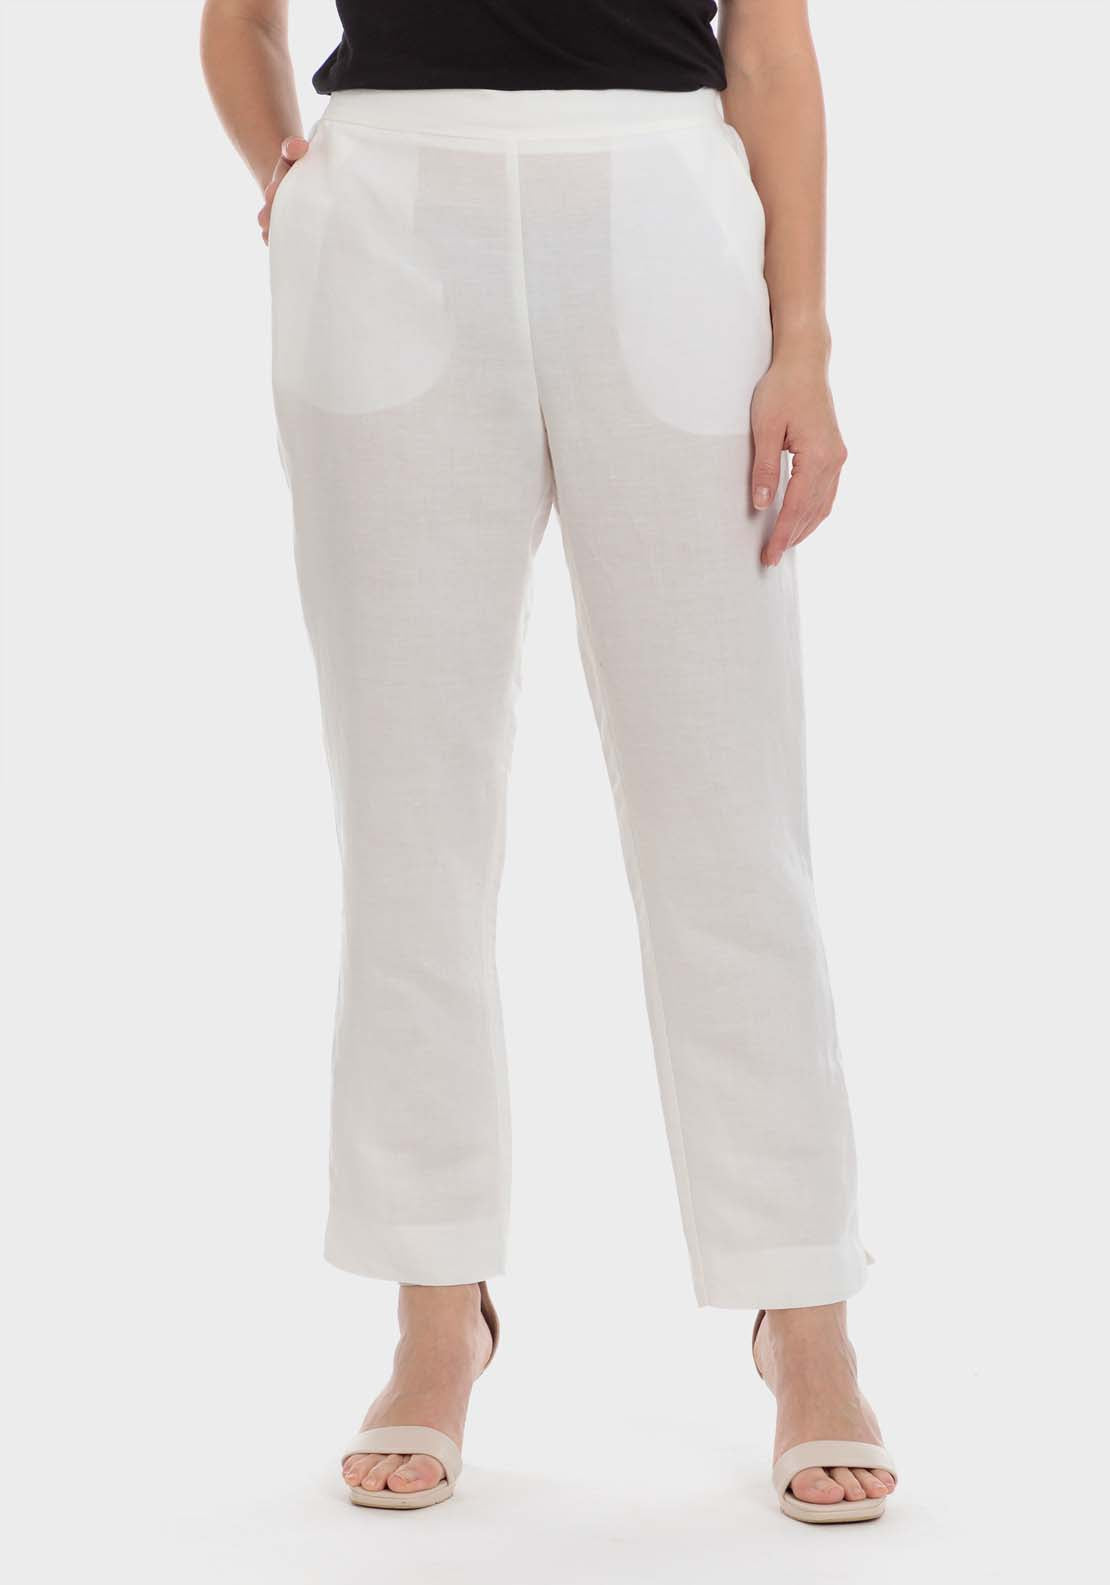 Punt Roma Linen Trouser - White 1 Shaws Department Stores